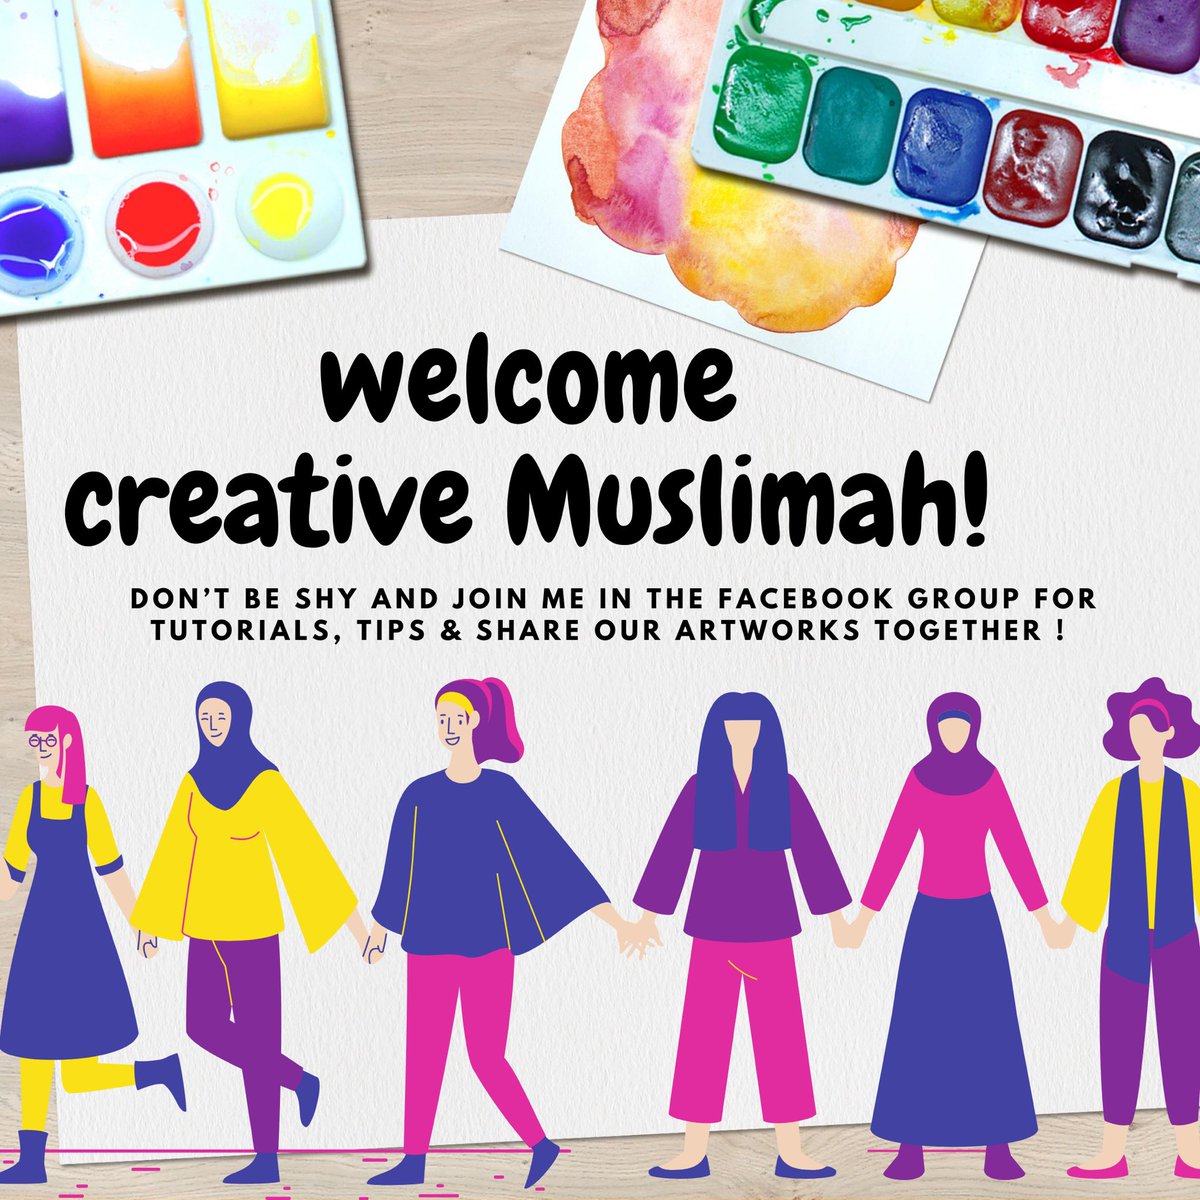 Copy & paste: facebook.com/groups/3174852… #muslimwomengroup #muslimwomenfacebookgroup #creativemuslimwomen #creativemuslimah #islamjournal #islamjournaling #quranjournal #quranjournaling #newgrouponfacebook